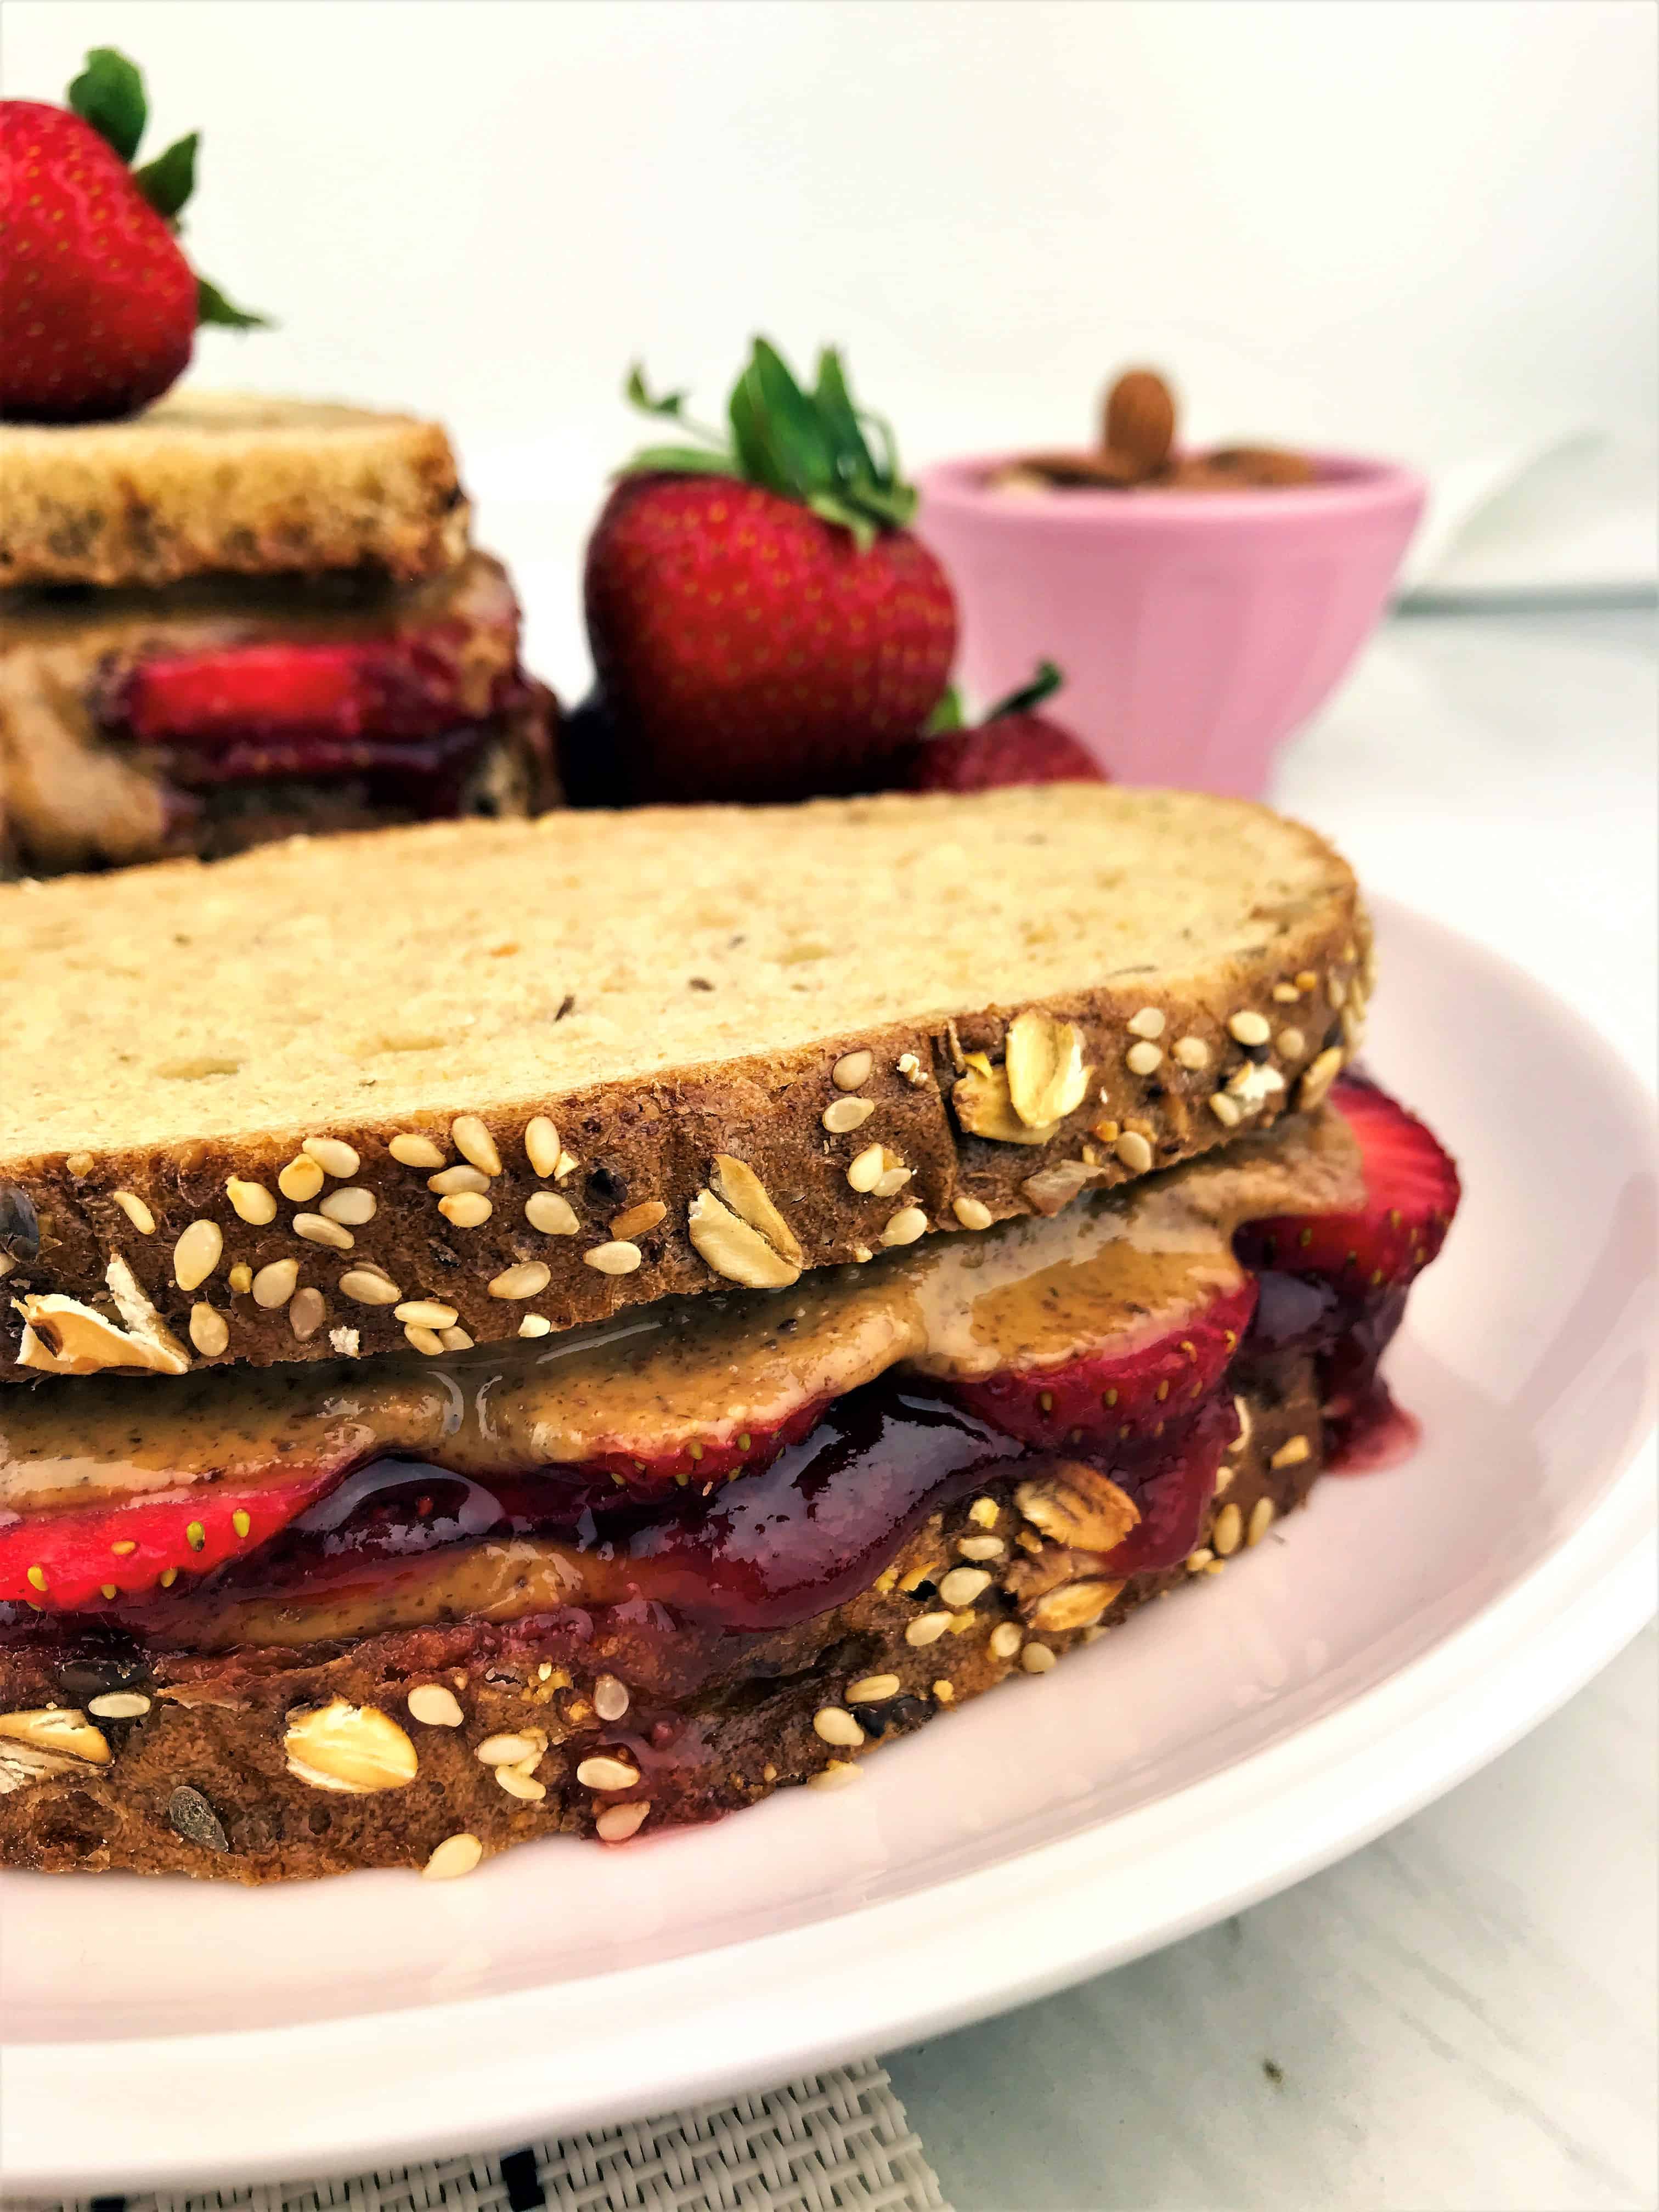 Copycat Starbucks PB&J Sandwich - Almond Butter, Strawberries and Jam